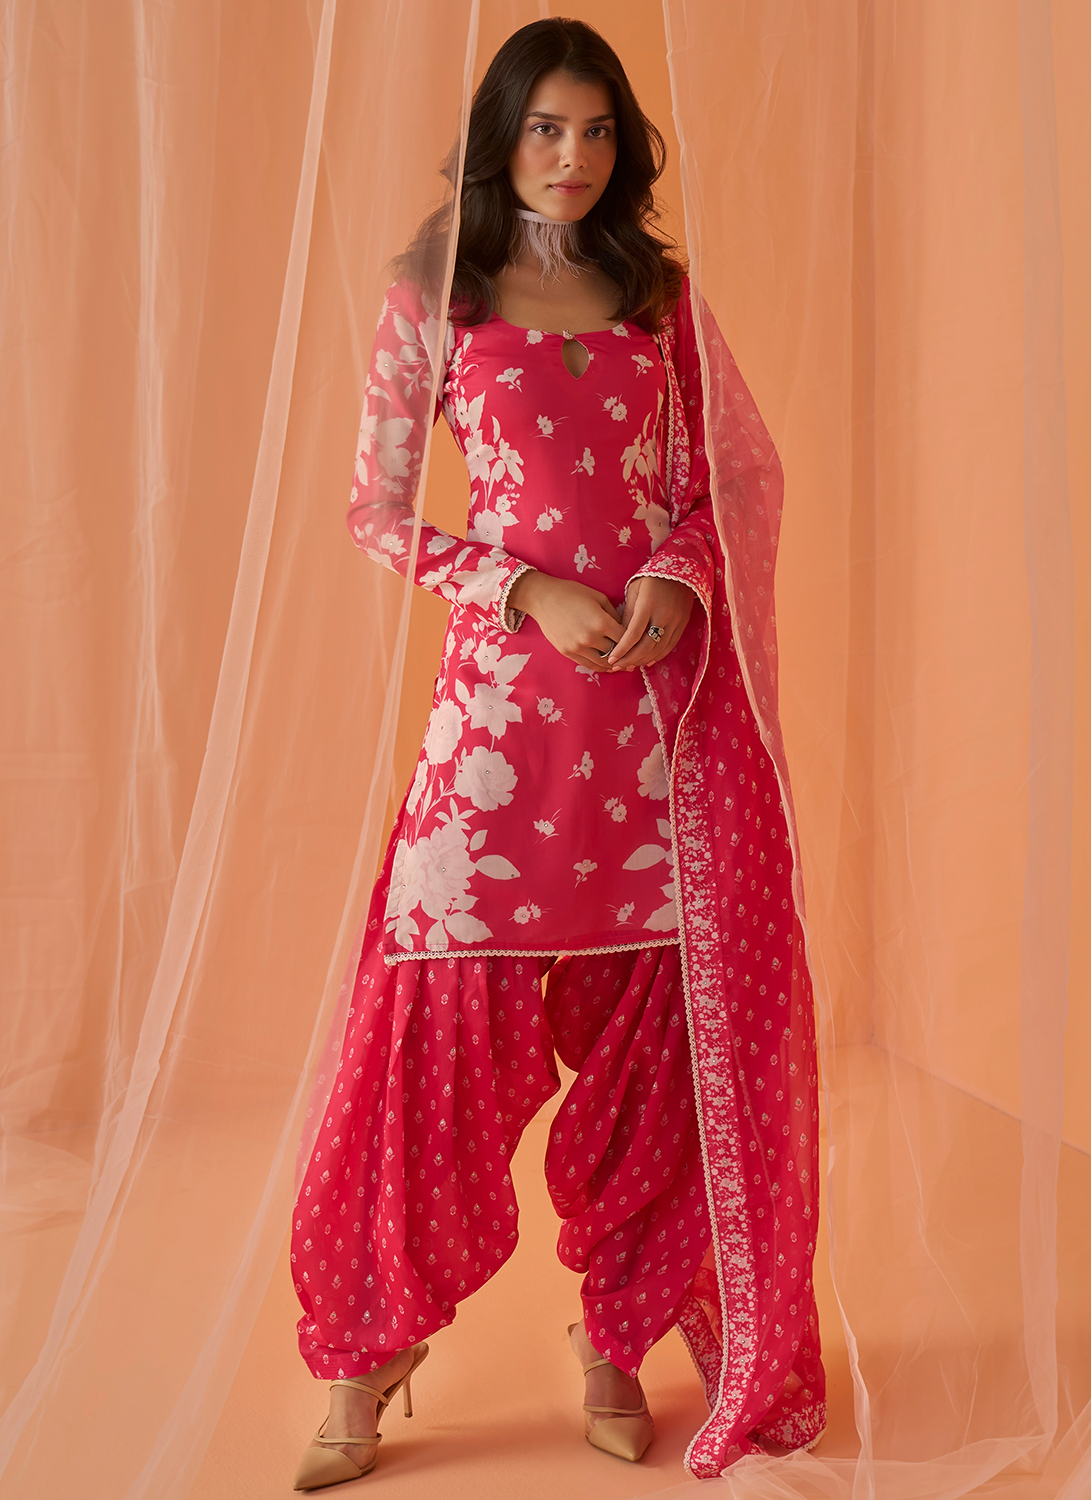 Punjabi Beauty Nimrat Khaira Owns A Pretty Suit Collection